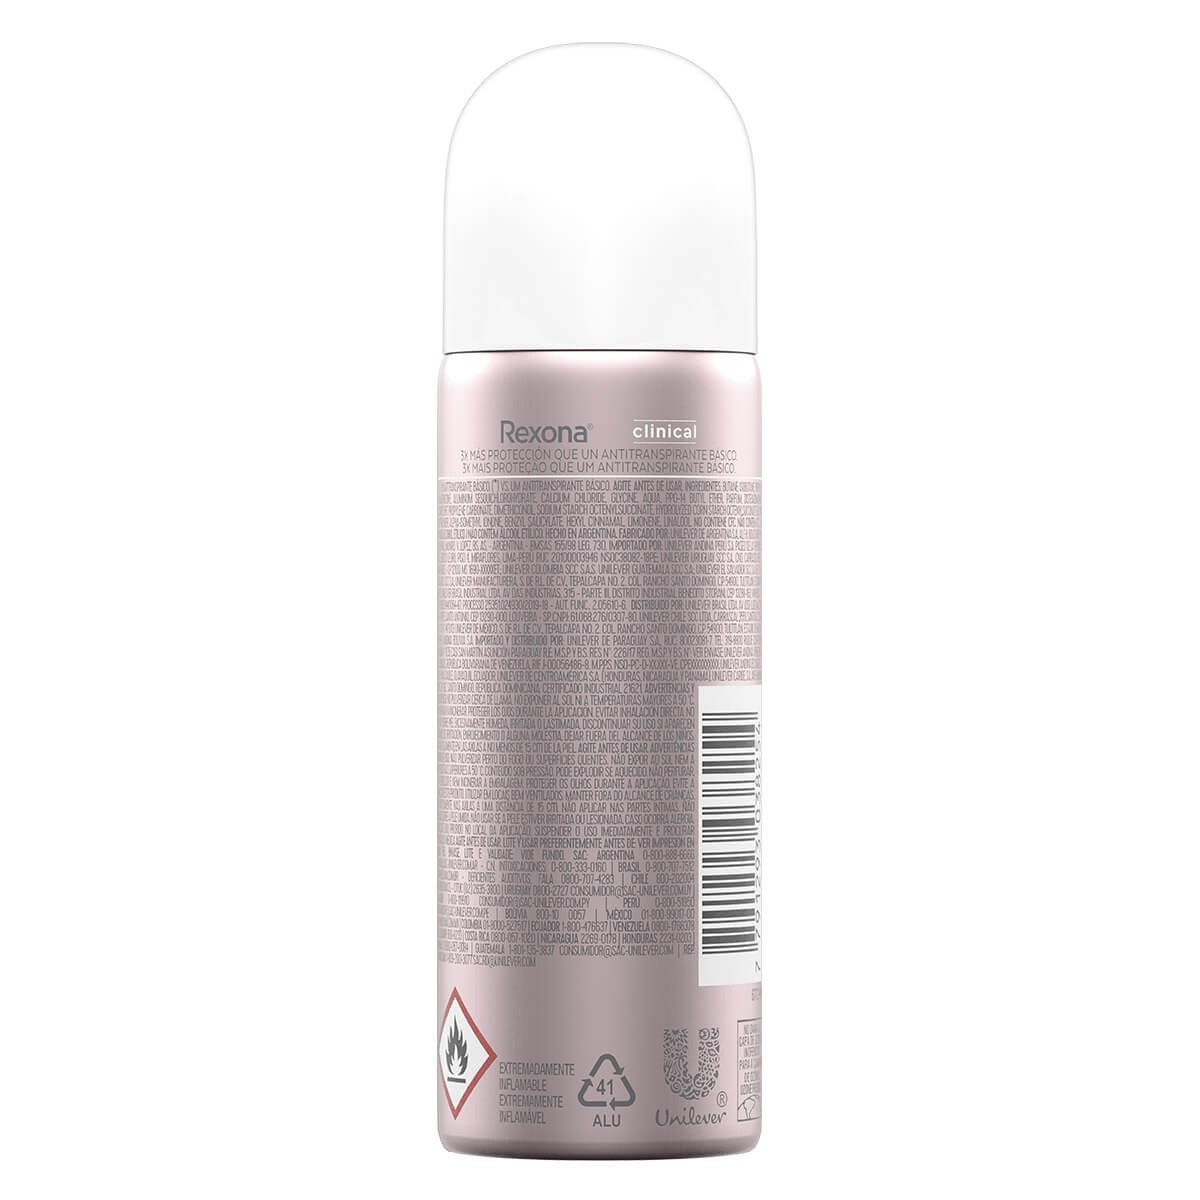 Desodorante Aerossol Antitranspirante Rexona Clinical Classic 150ml